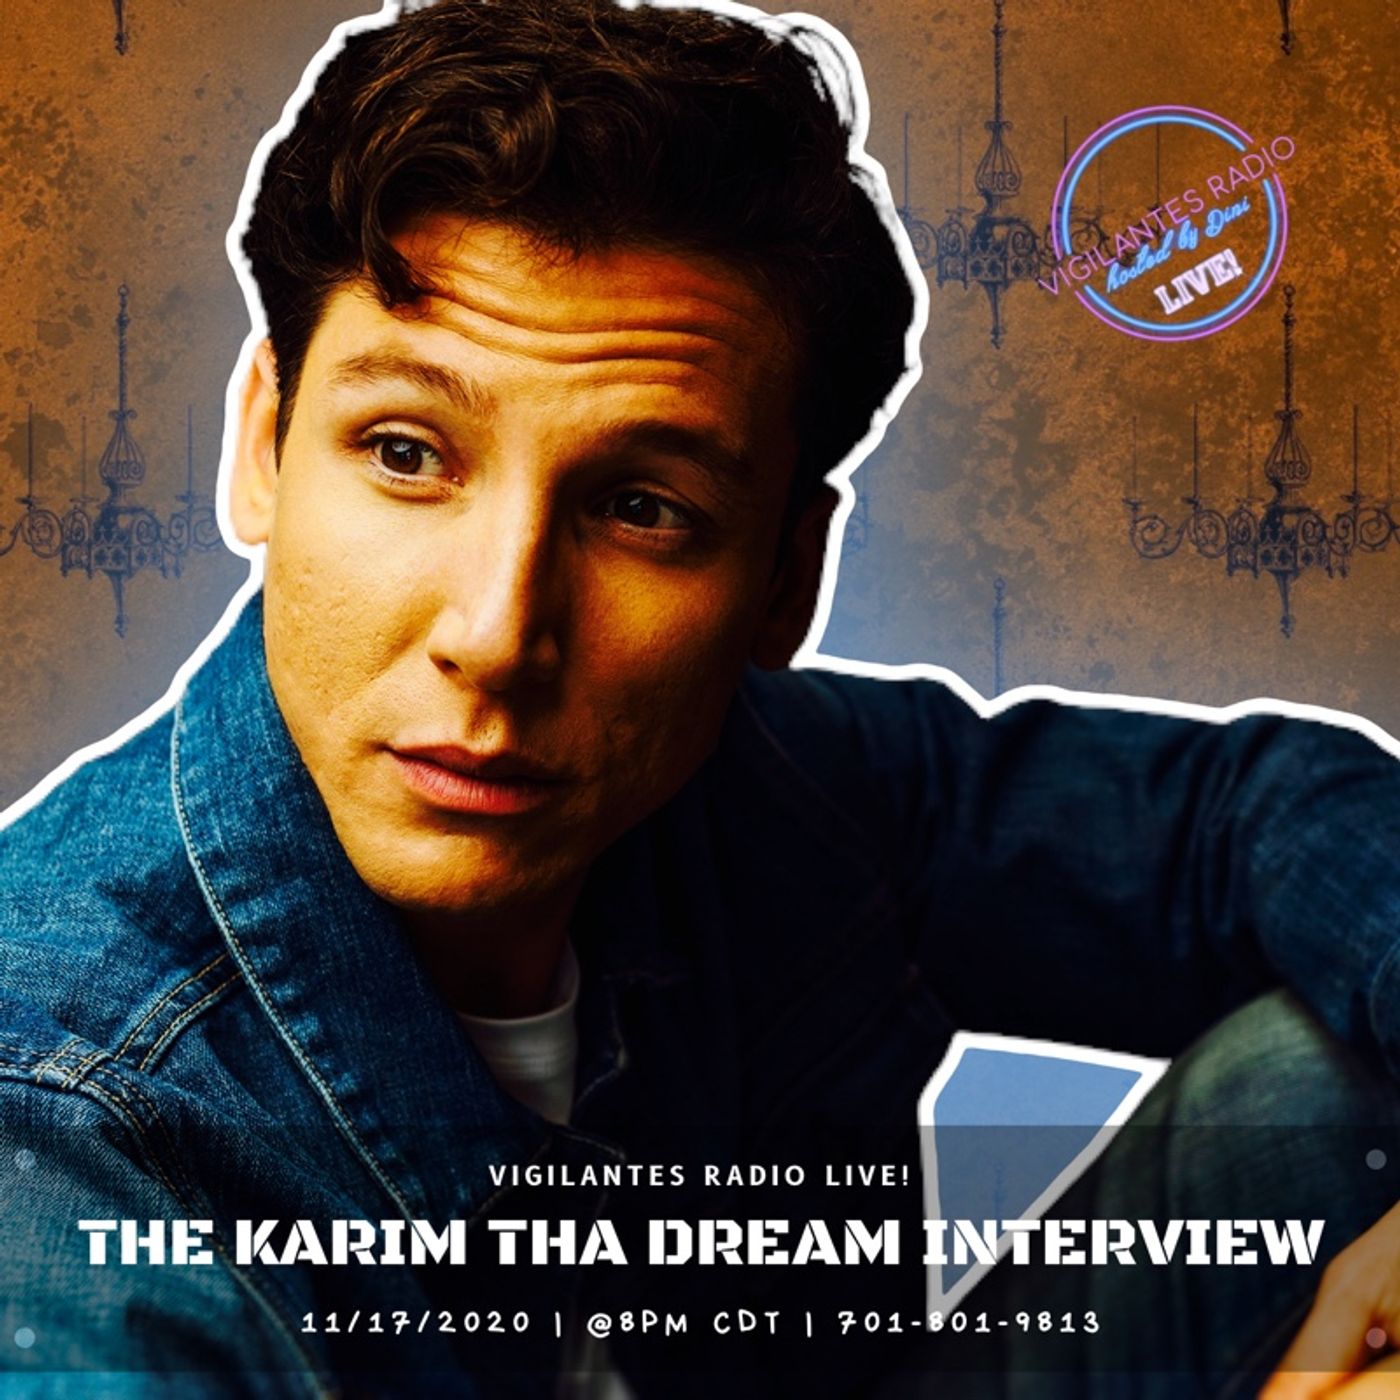 The Karim Tha Dream Interview. Image